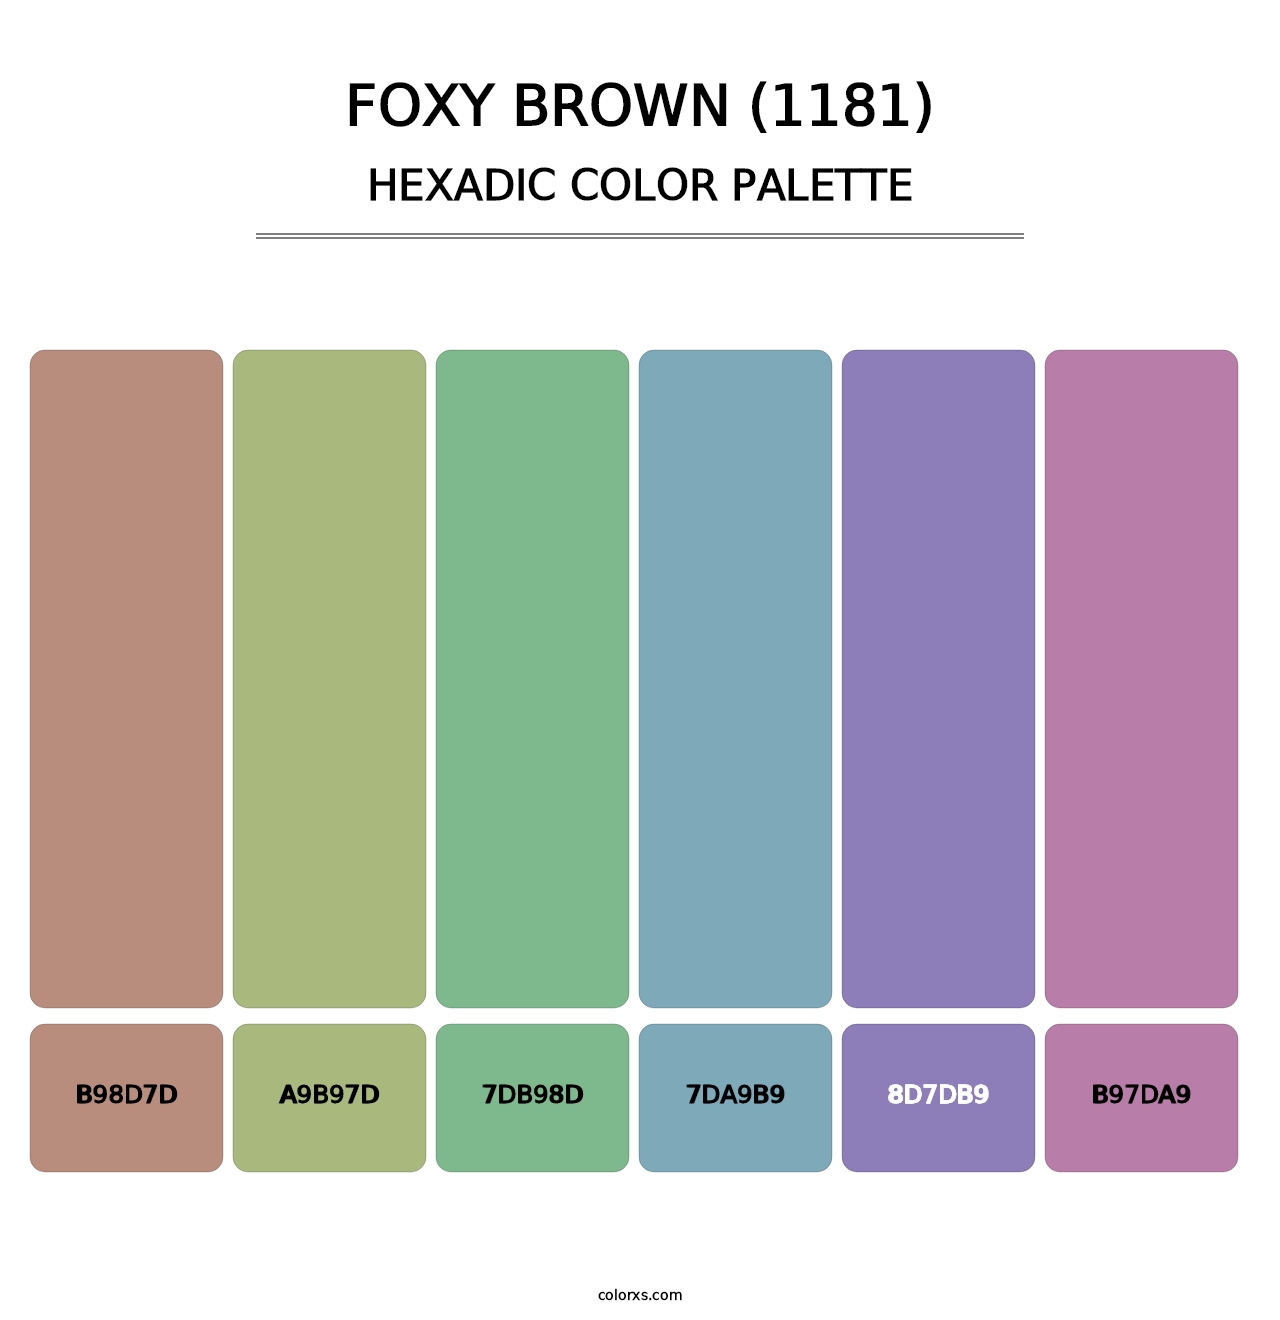 Foxy Brown (1181) - Hexadic Color Palette